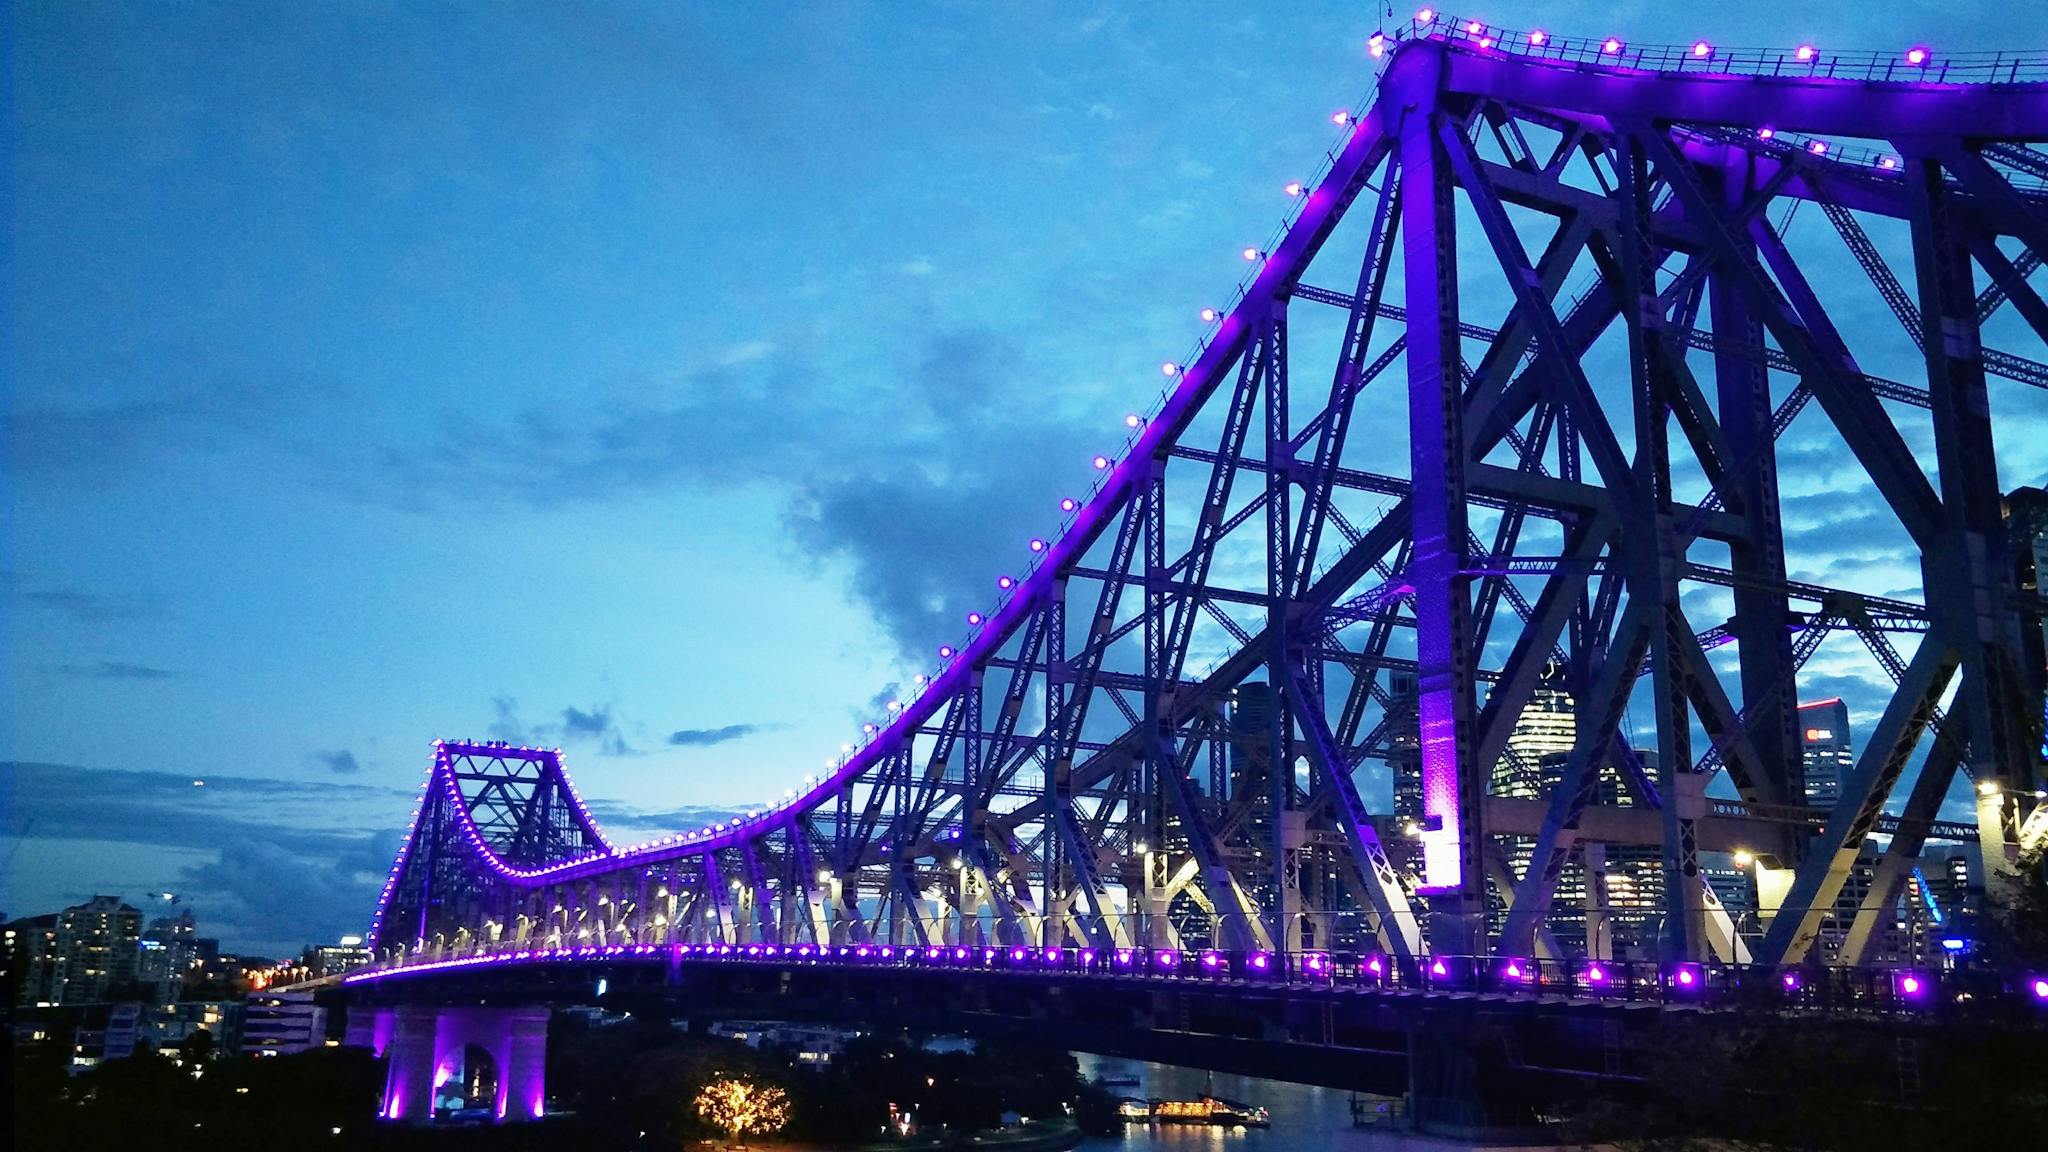 Story Bridge at Night